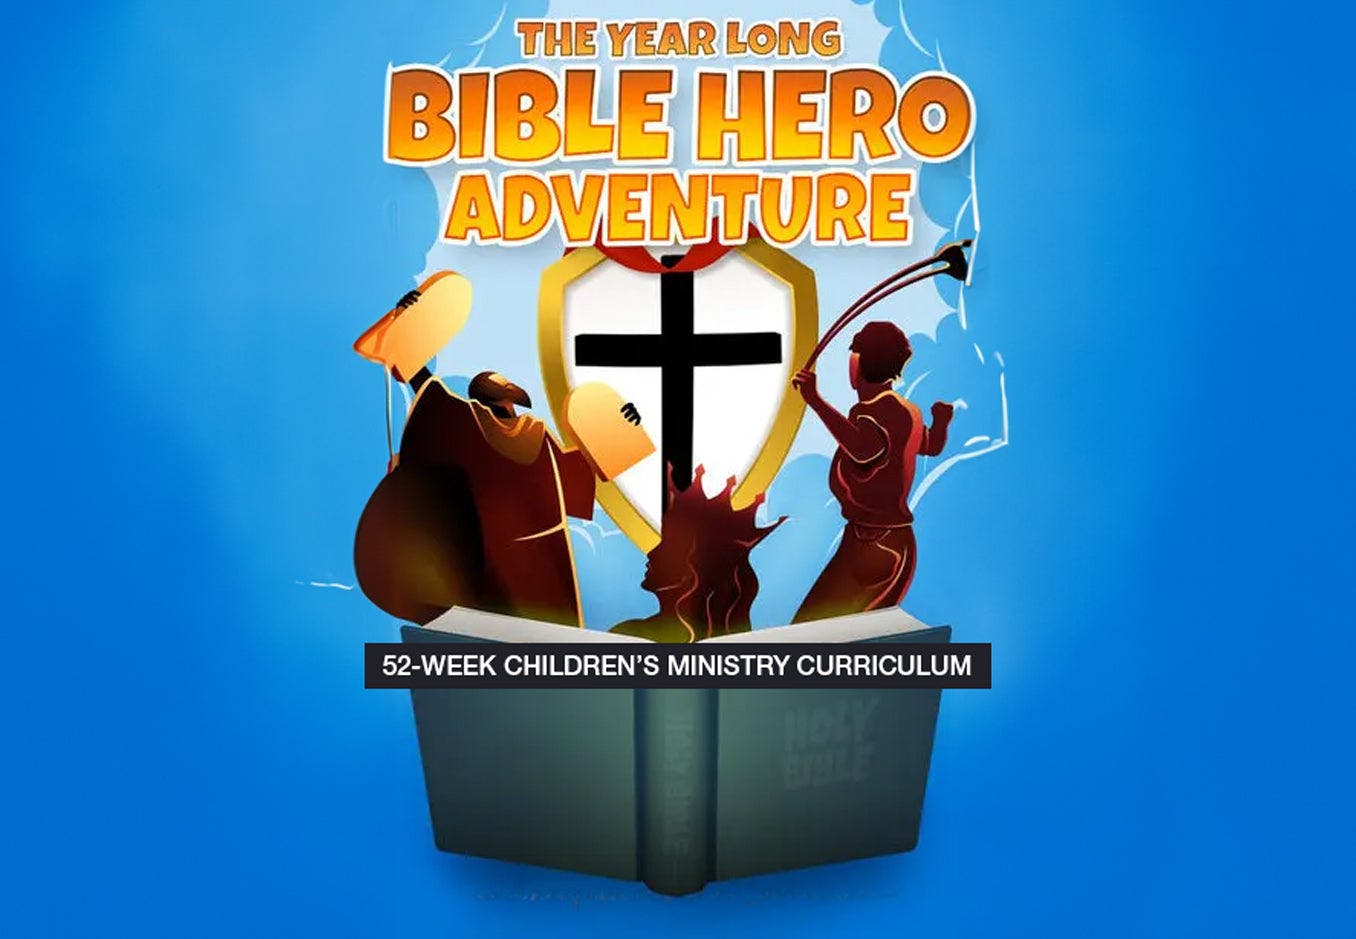 The Year Long Bible Hero Adventure 52-Week Children's Ministry Curriculum